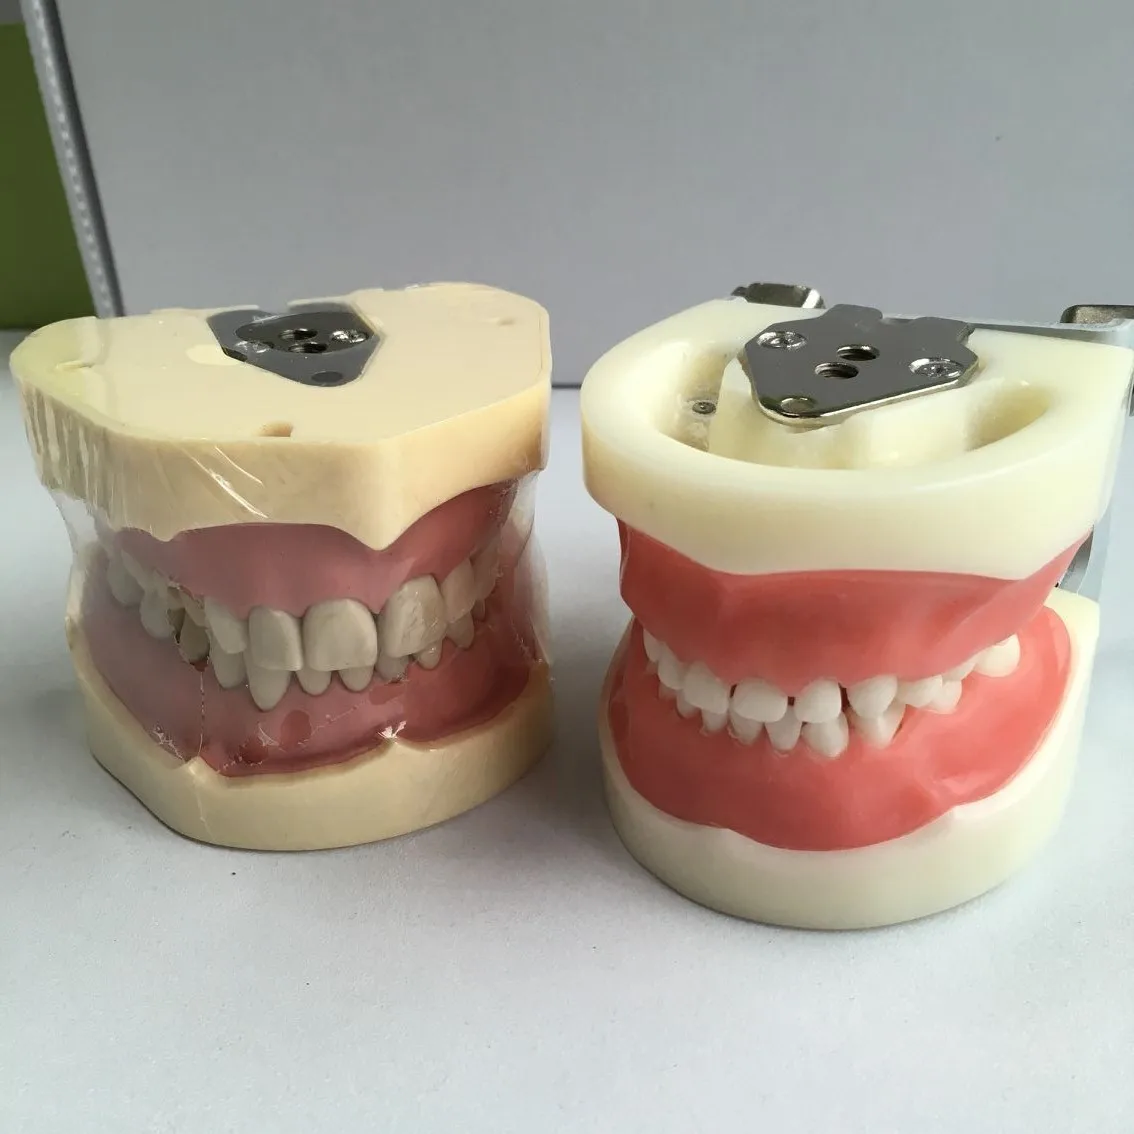 Student Teaching Study Education Nissin Dental Model Base - Buy Dental Model,Nissin Dental Model